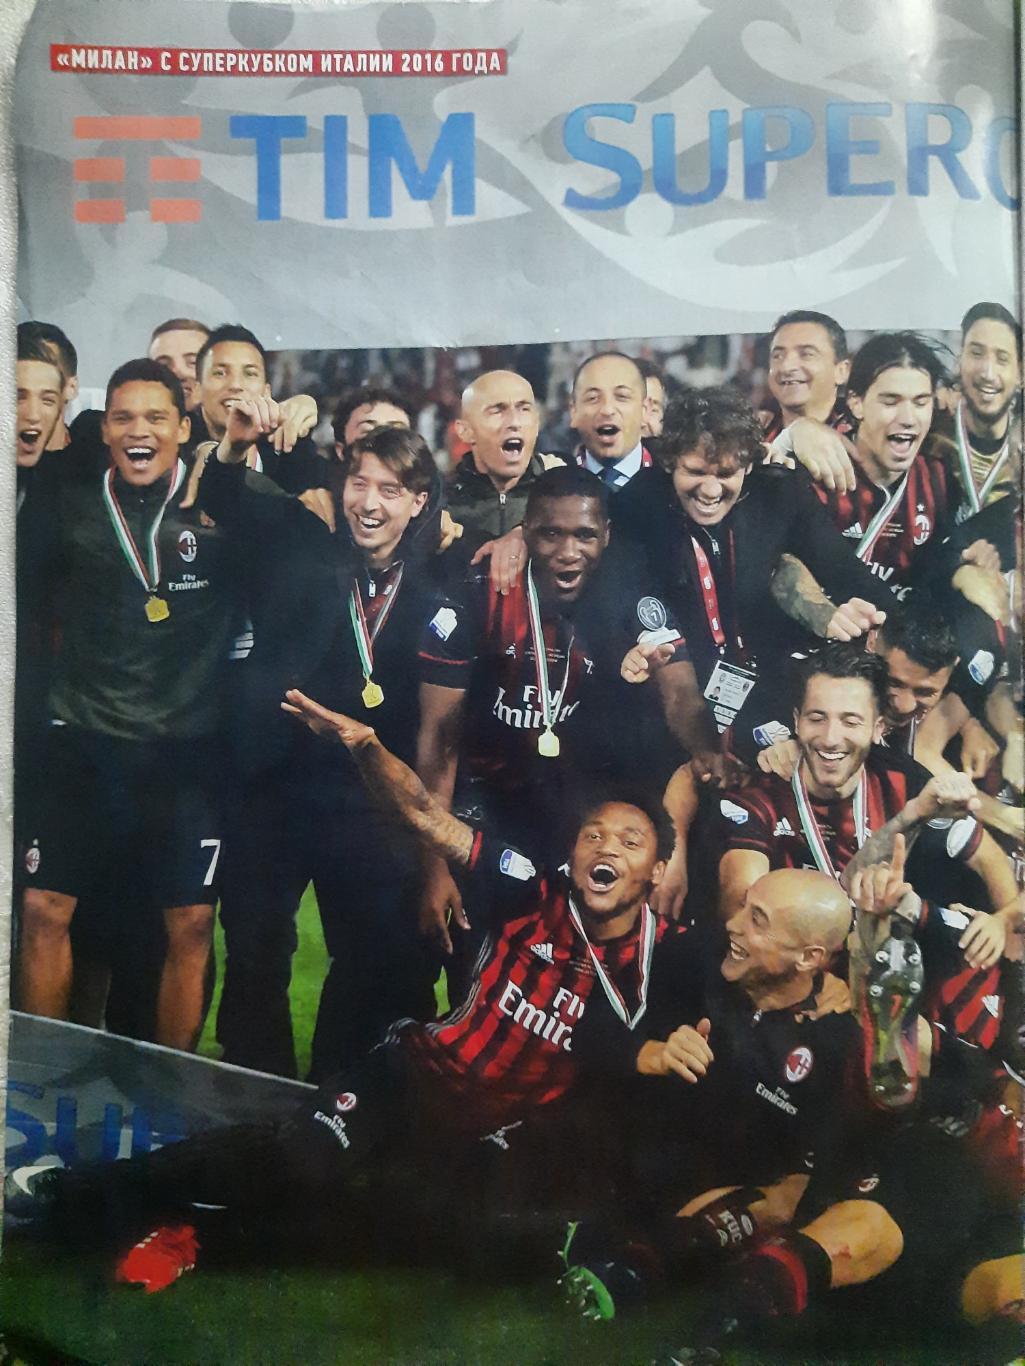 еженедельник Футбол #102-103 2016, постеры: Милан, Мхитарян... 1